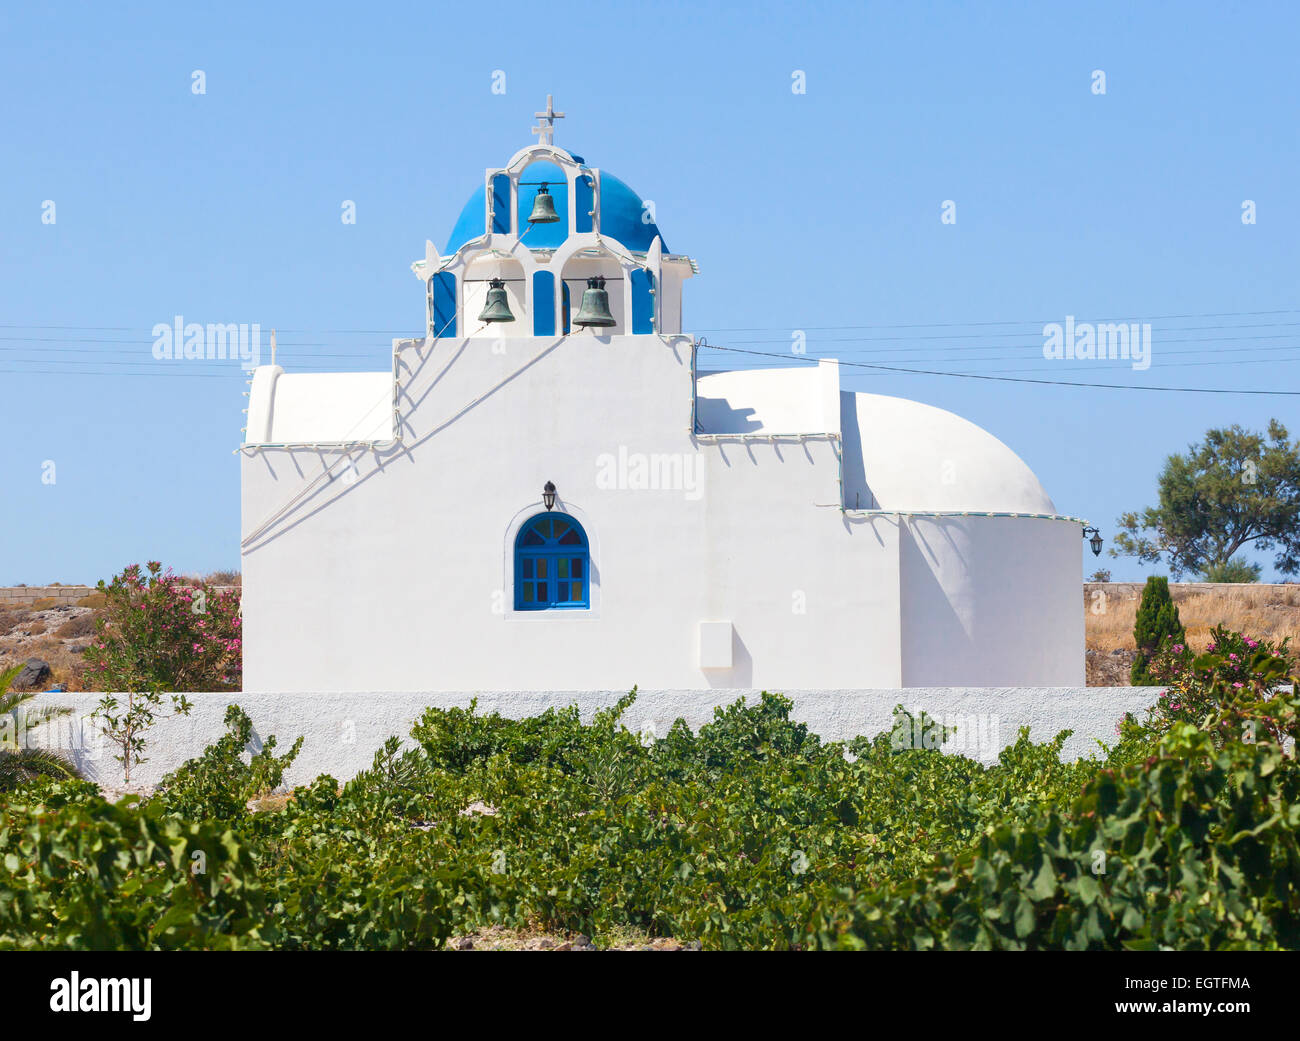 Church with blue dome in vineyard field. Santorini island. Greece. Stock Photo